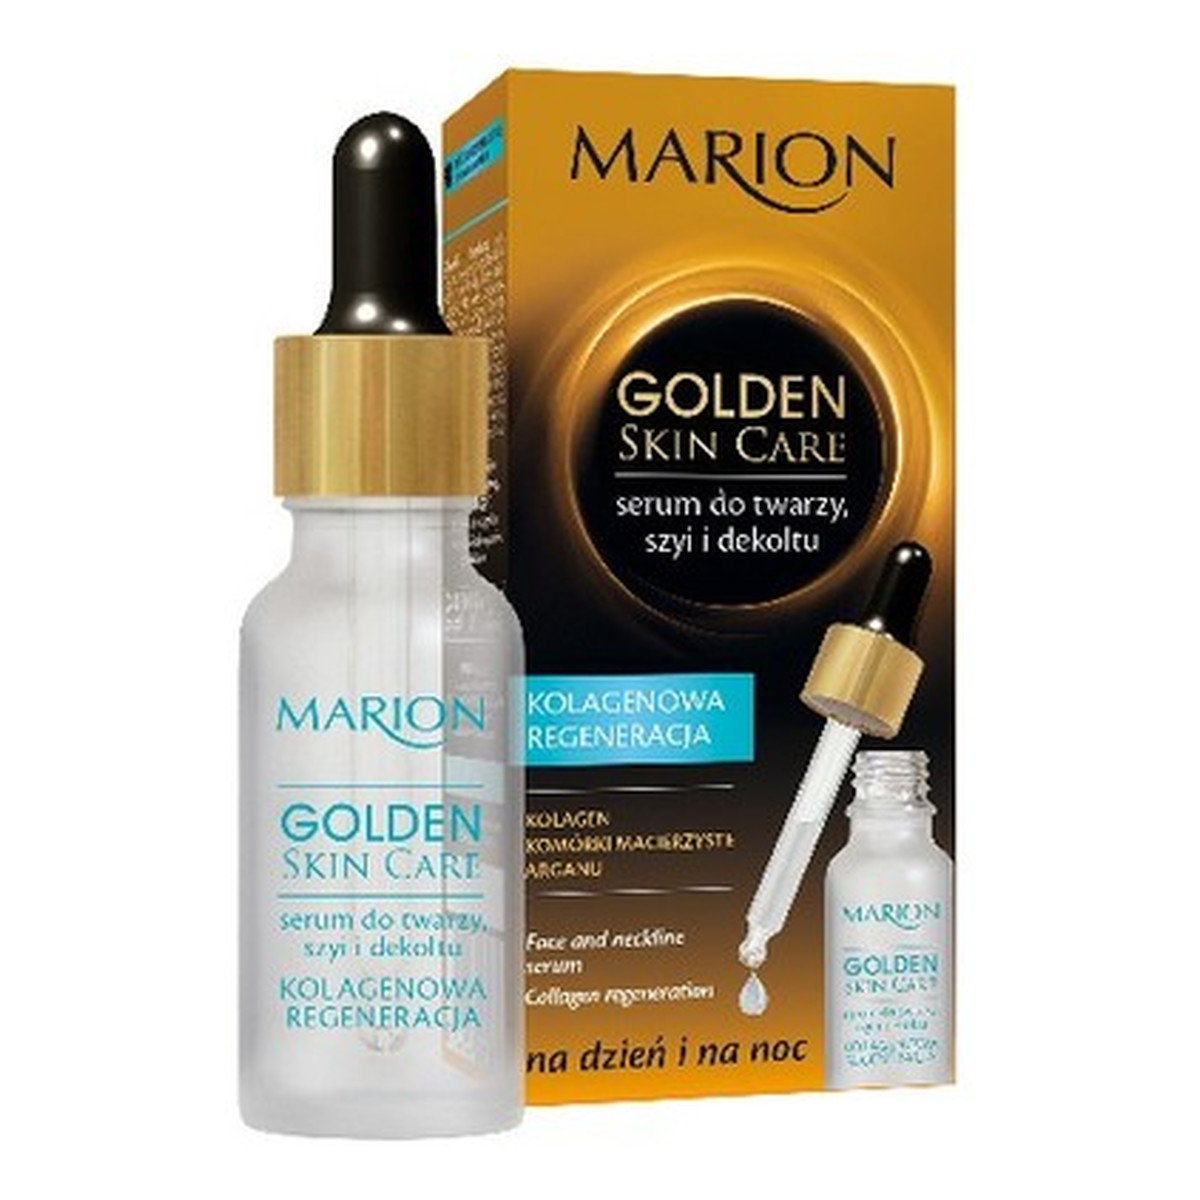 Marion Golden Skin Care Kolagenowa Regeneracja Serum Do Twarzy Szyi i Dekoltu 20ml